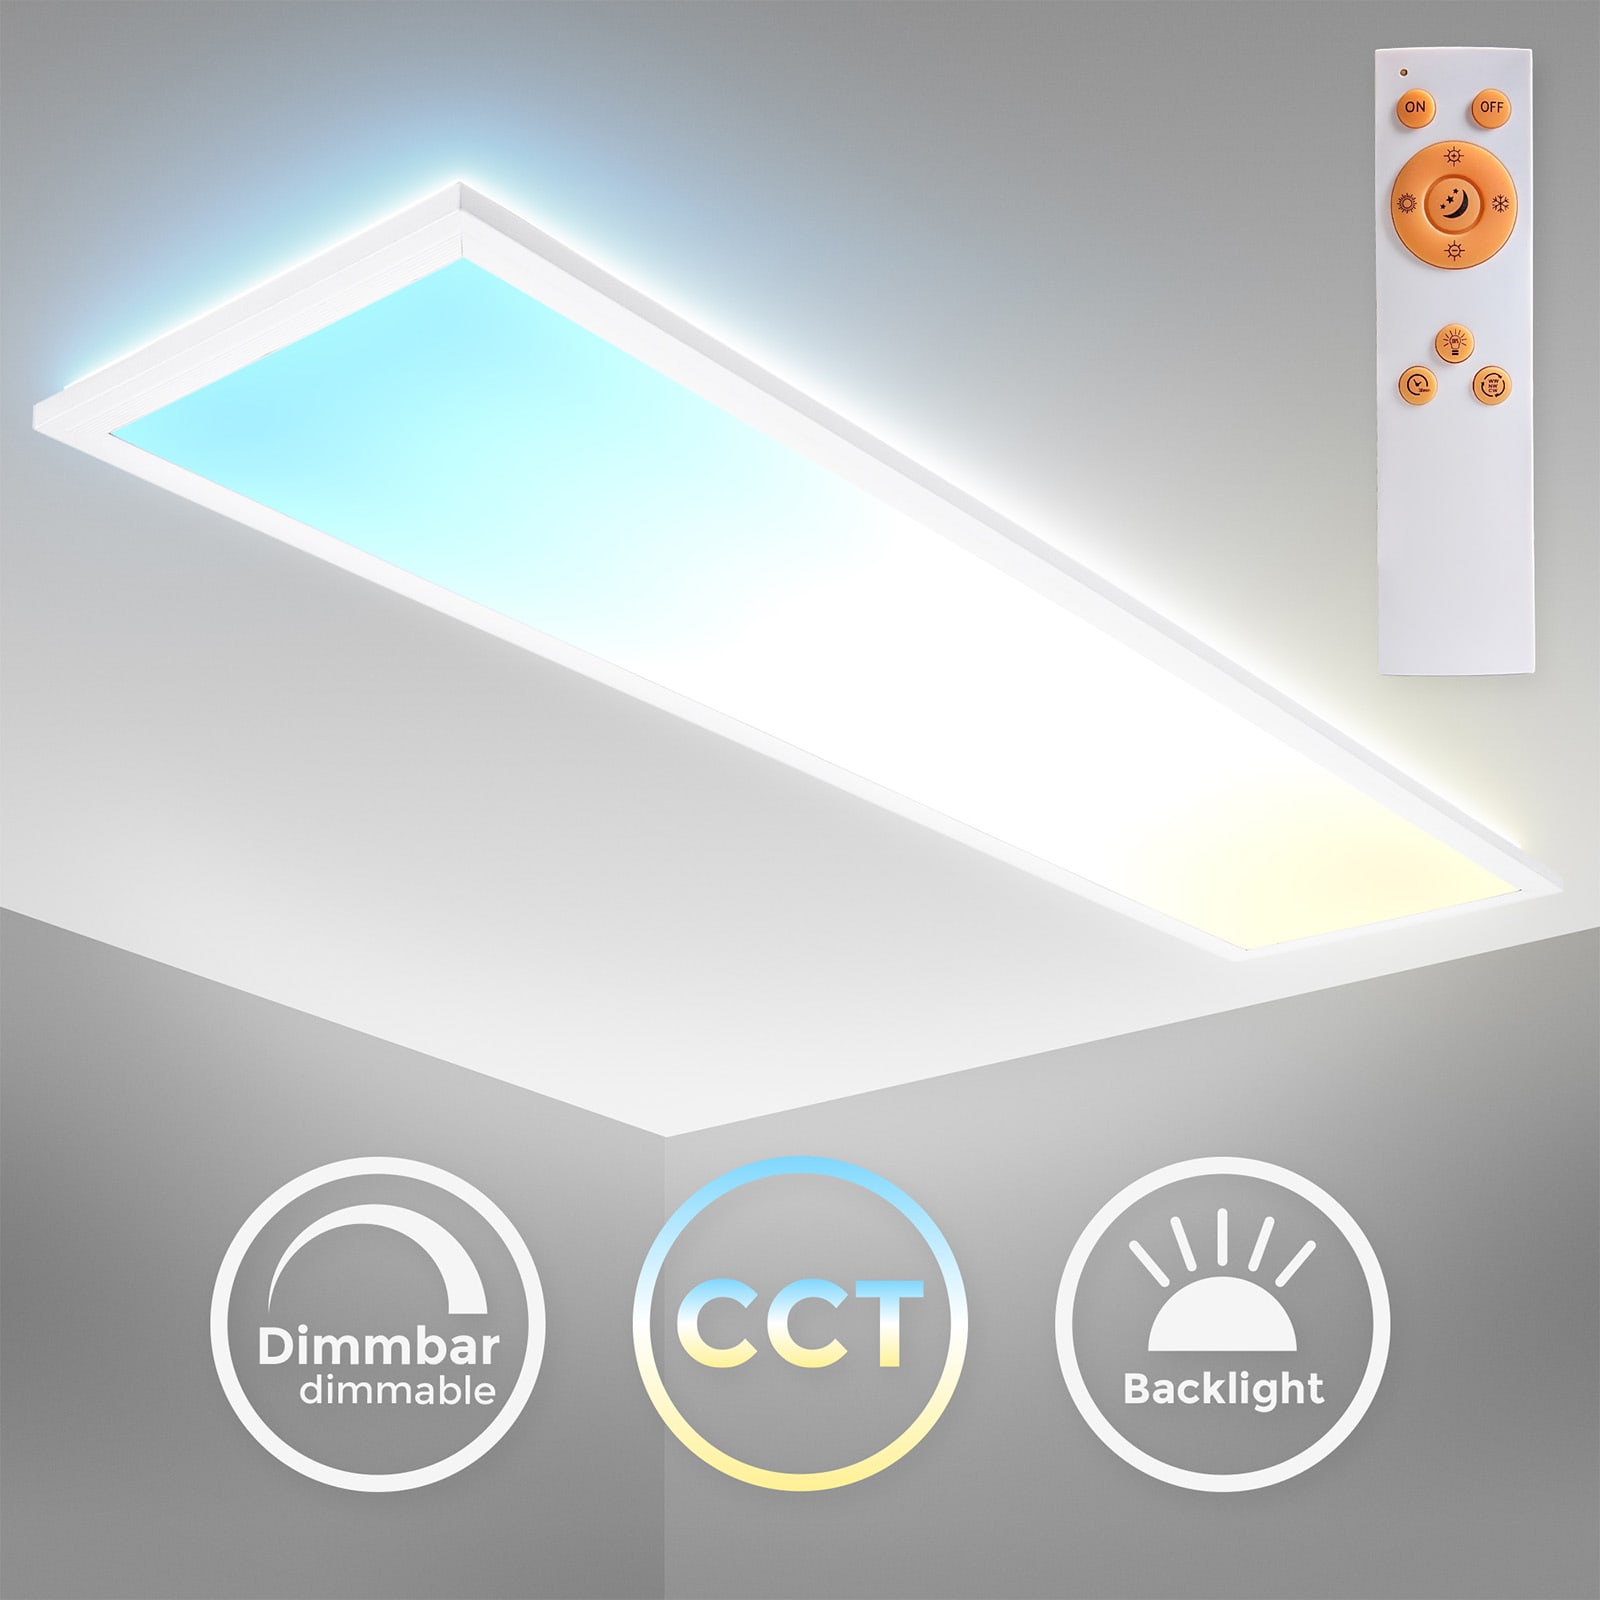 LED Panel CCT, 119,5x29,5cm, Backlight, weiß, dimmbar, Fernbedienung - 3